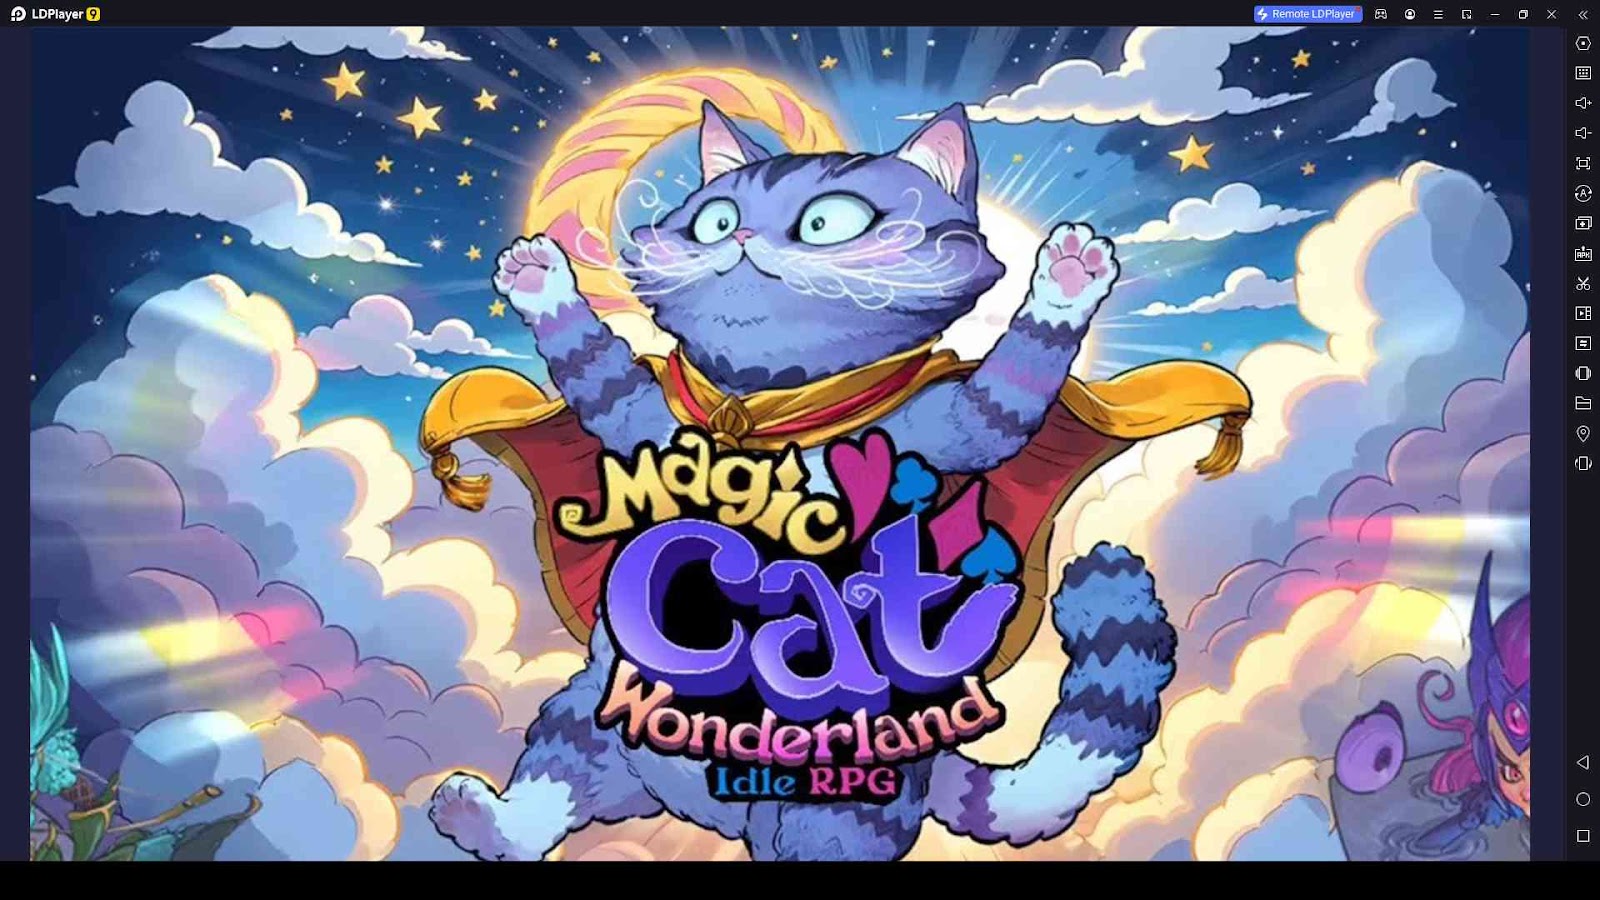 Magic Cat Wonderland: Idle RPG Beginner's Guide